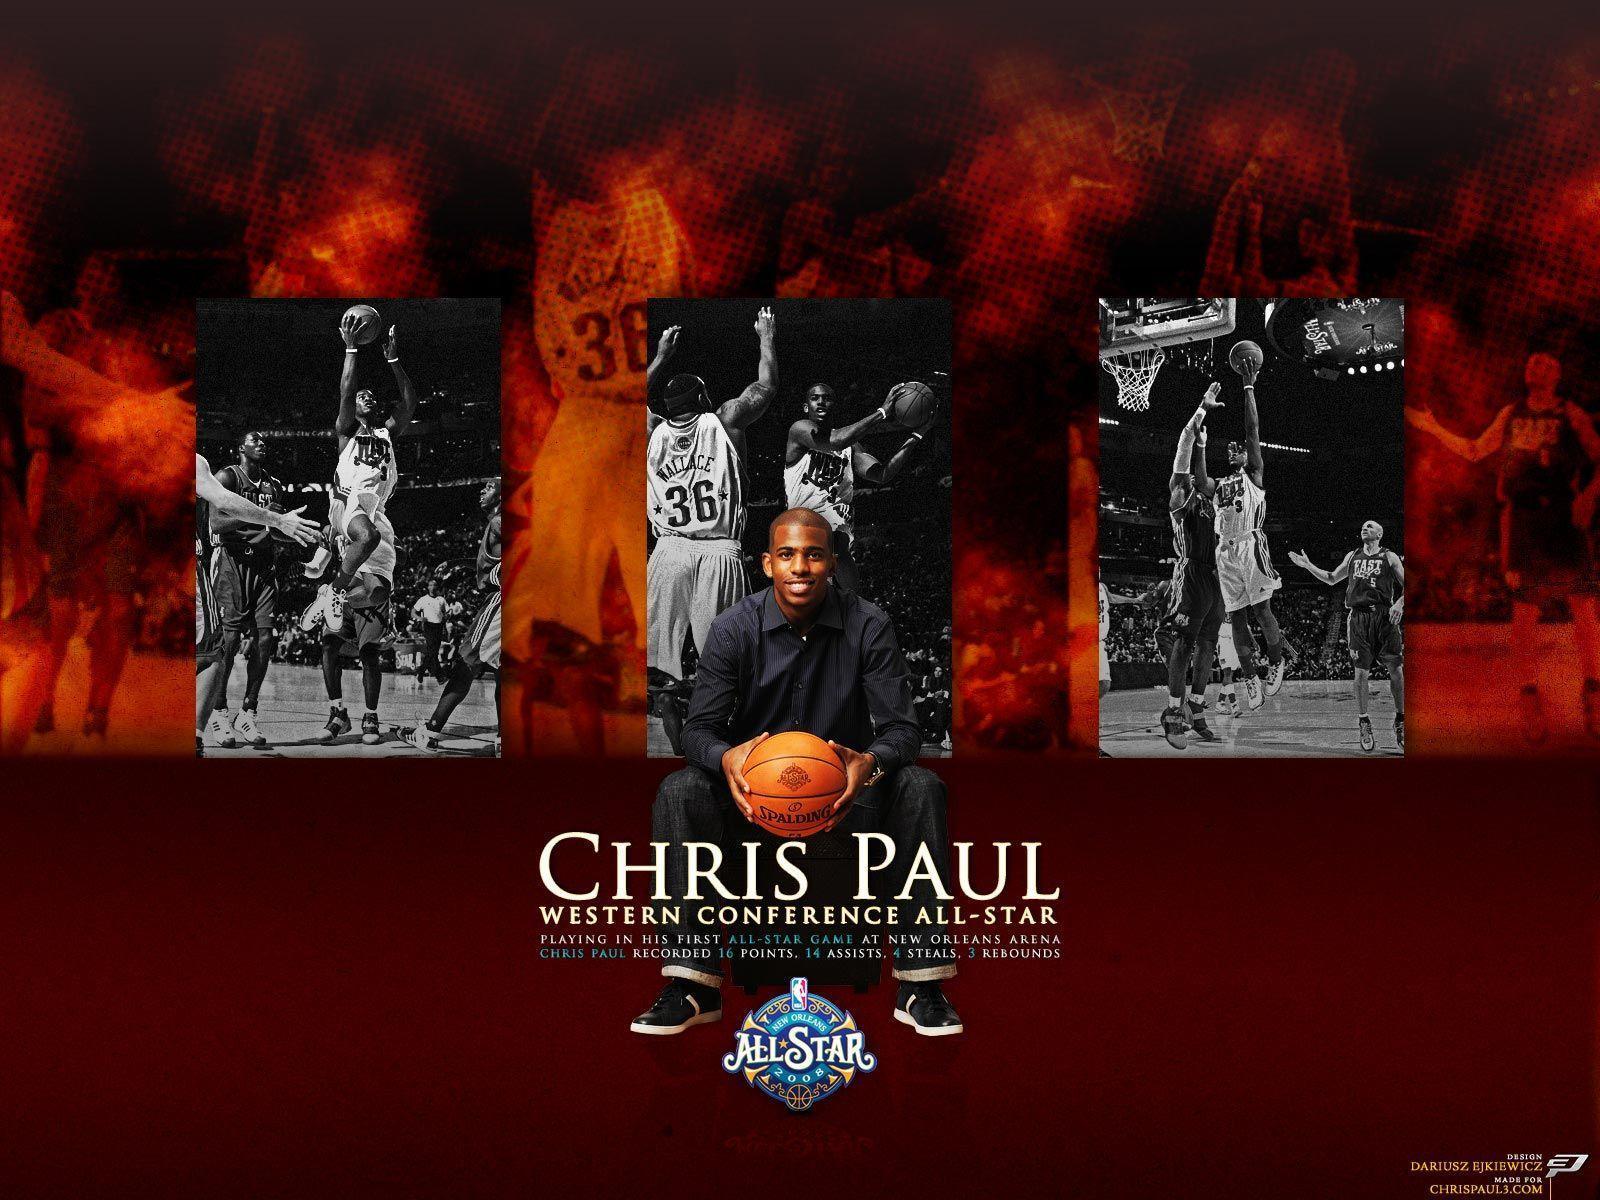 Chris Paul All Star 2008 Wallpaper. Basketball Wallpaper at